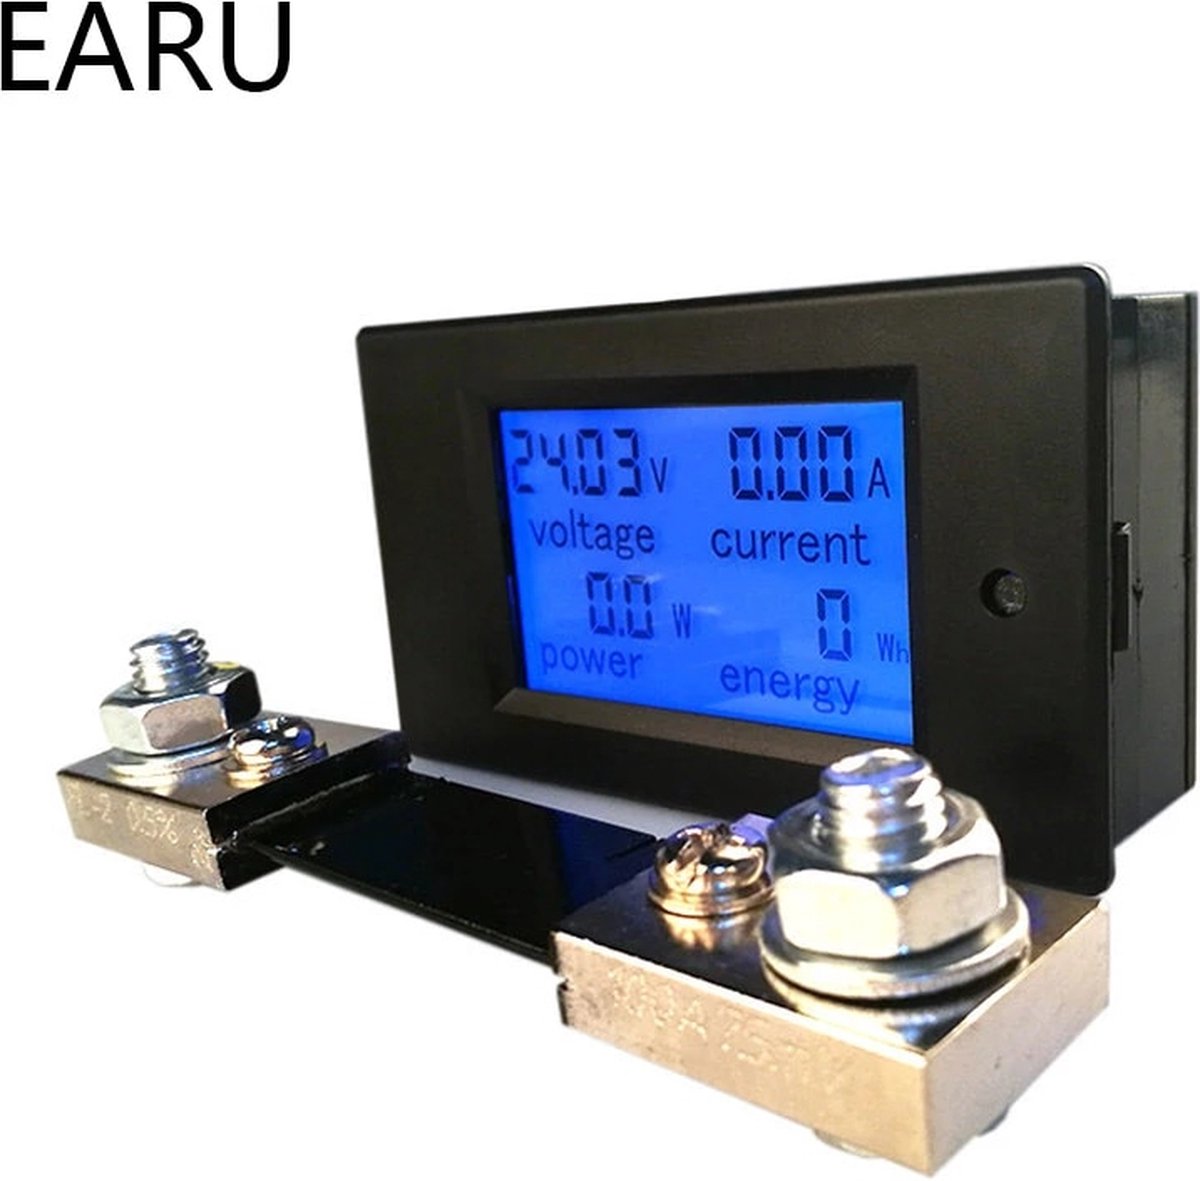 Earu® DC 6.5-100V 0 - 20A - Lcd-scherm - Digitale Volt - Ampere - Vermogen Meter - Spanning Power - Energie Meter - Multimeter - Ampèremeter - Voltmeter.